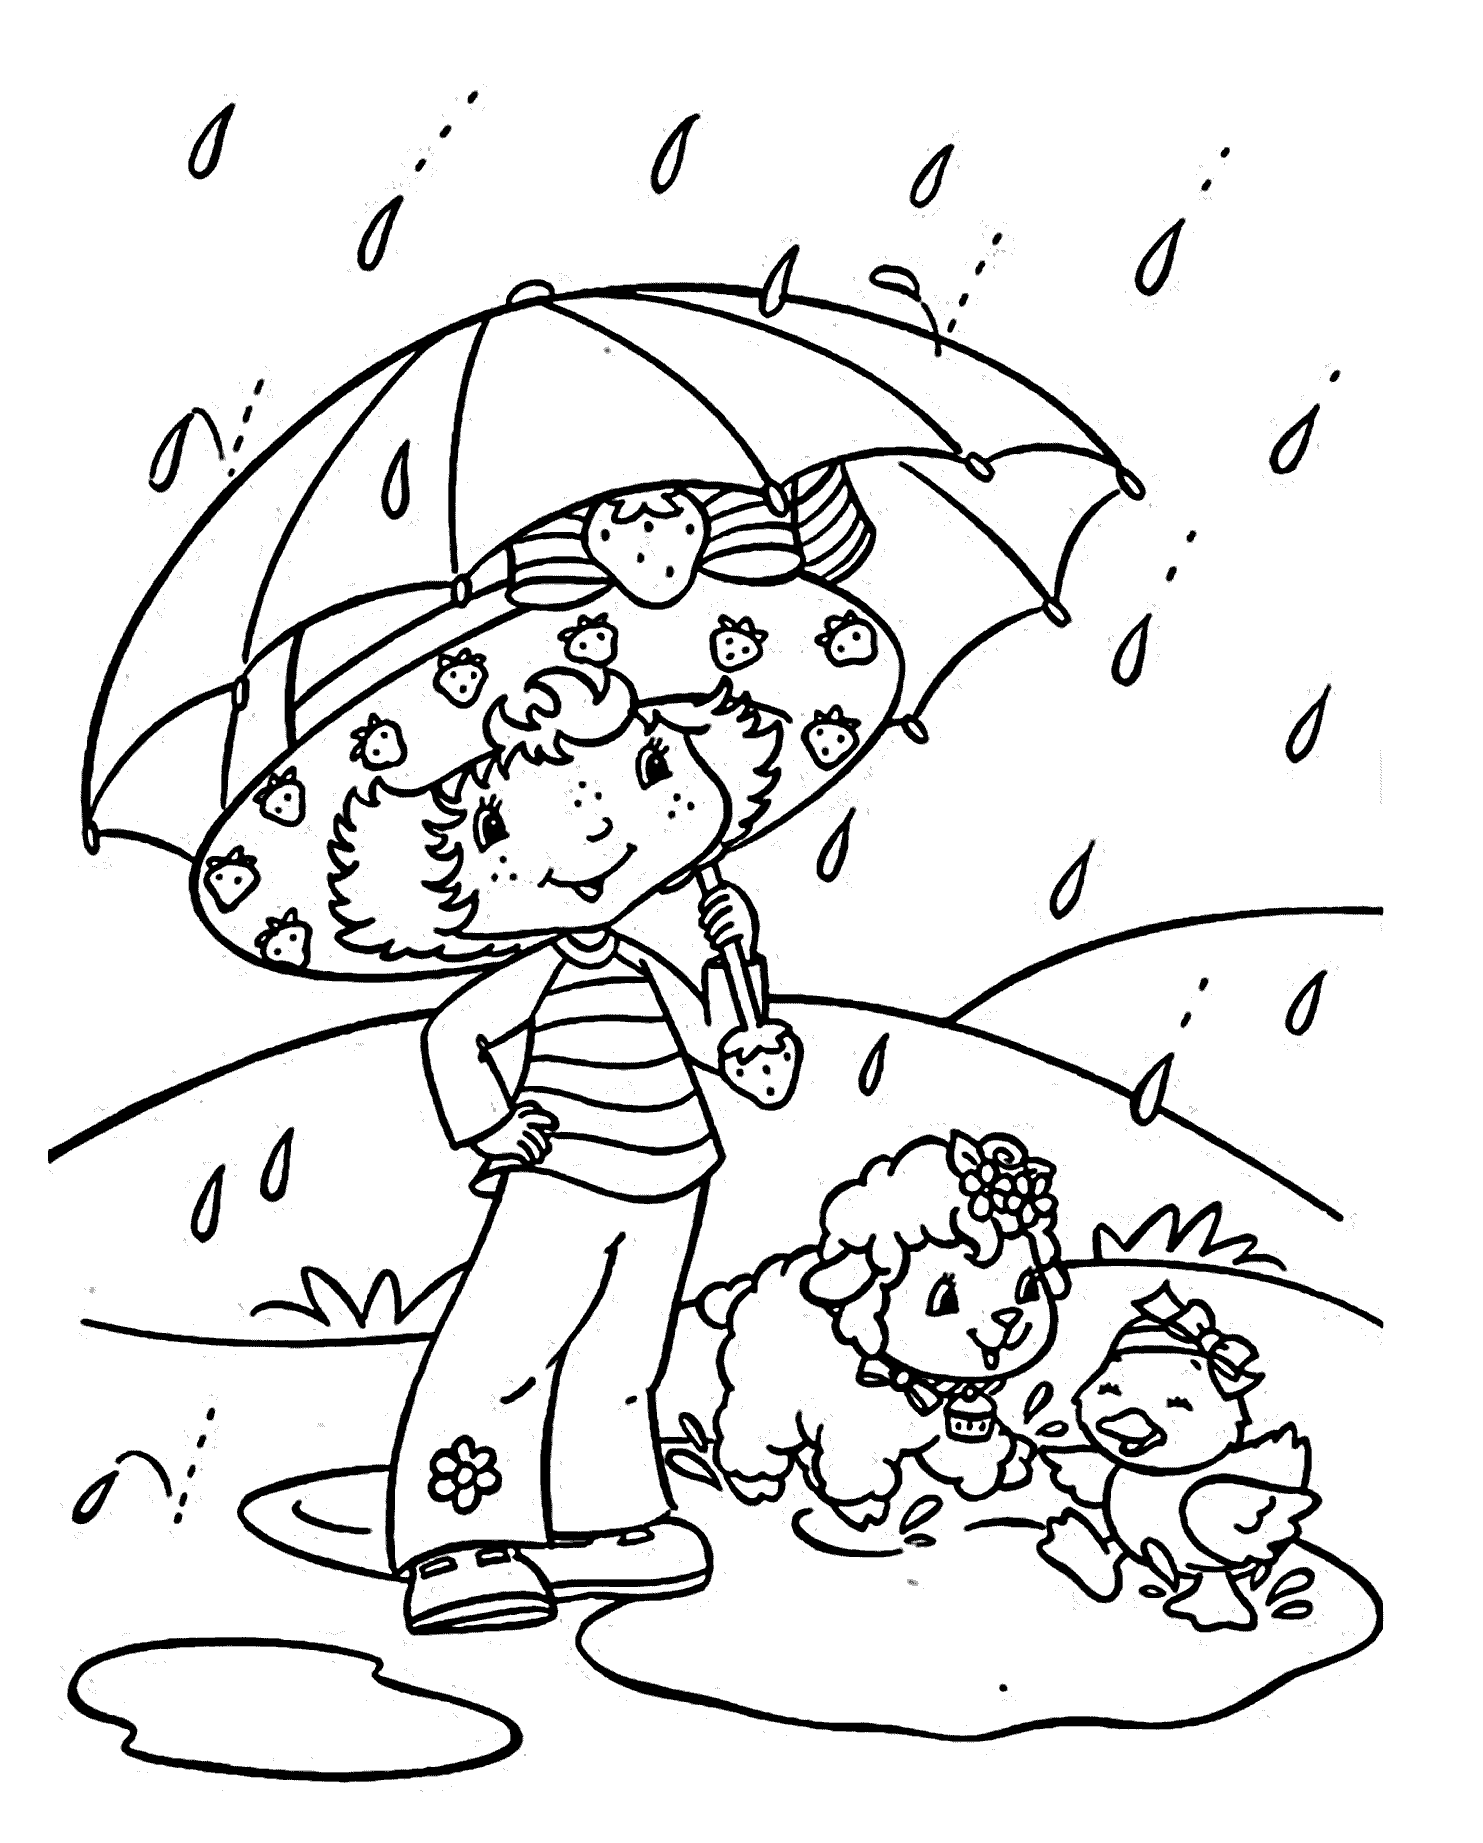 rain-coloring-page-0018-q1